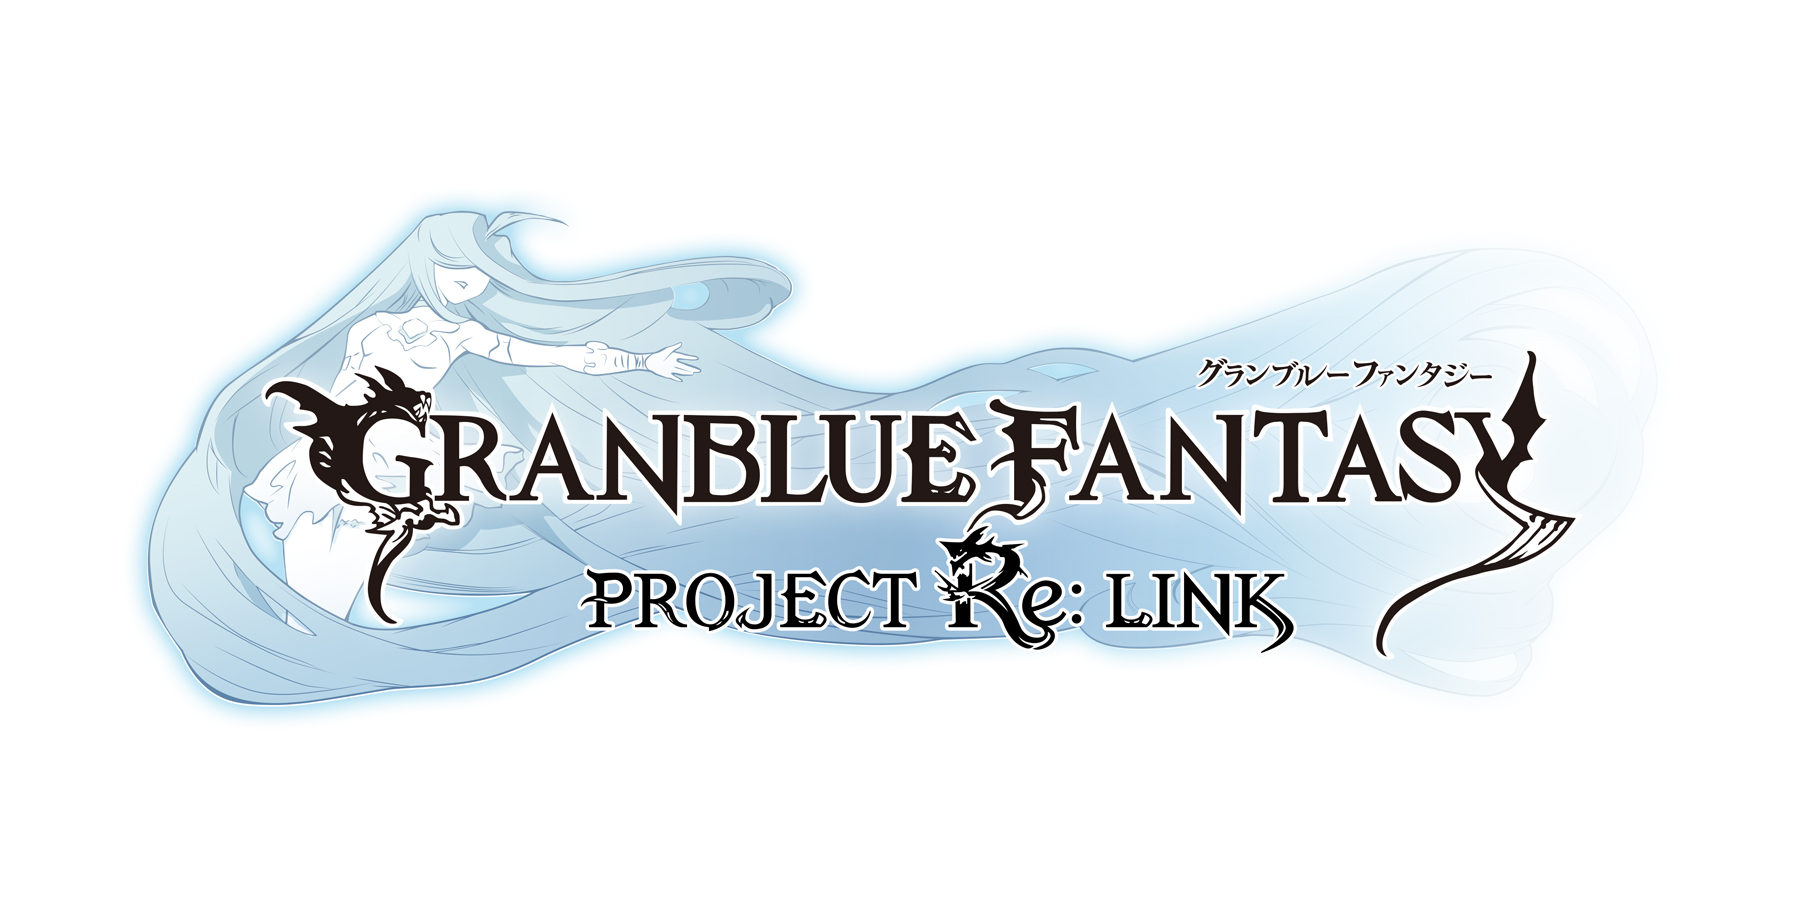 granblue fantasy relink official site